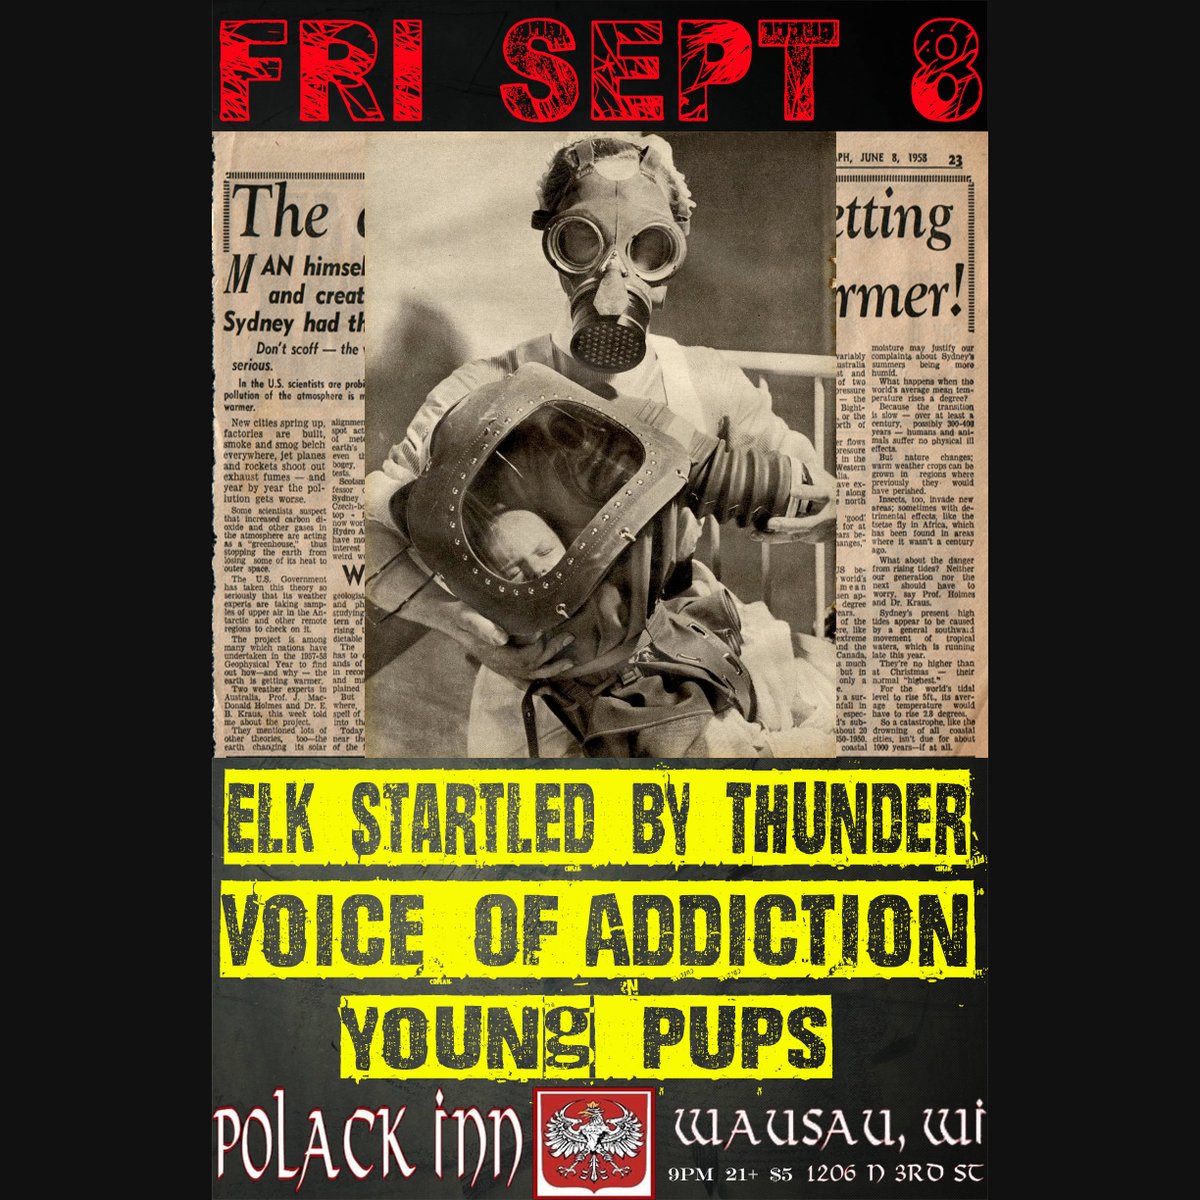 TONIGHT! in WAUSAU Wisconsin at @polackinn w/ #elkstartledbythunder & @VOArockers & @yxvngpvps facebook.com/events/1449225… #PunkShow #punk #VoiceOfAddiction #Chicagopunk #punkrock #VOA #DIY #FYP